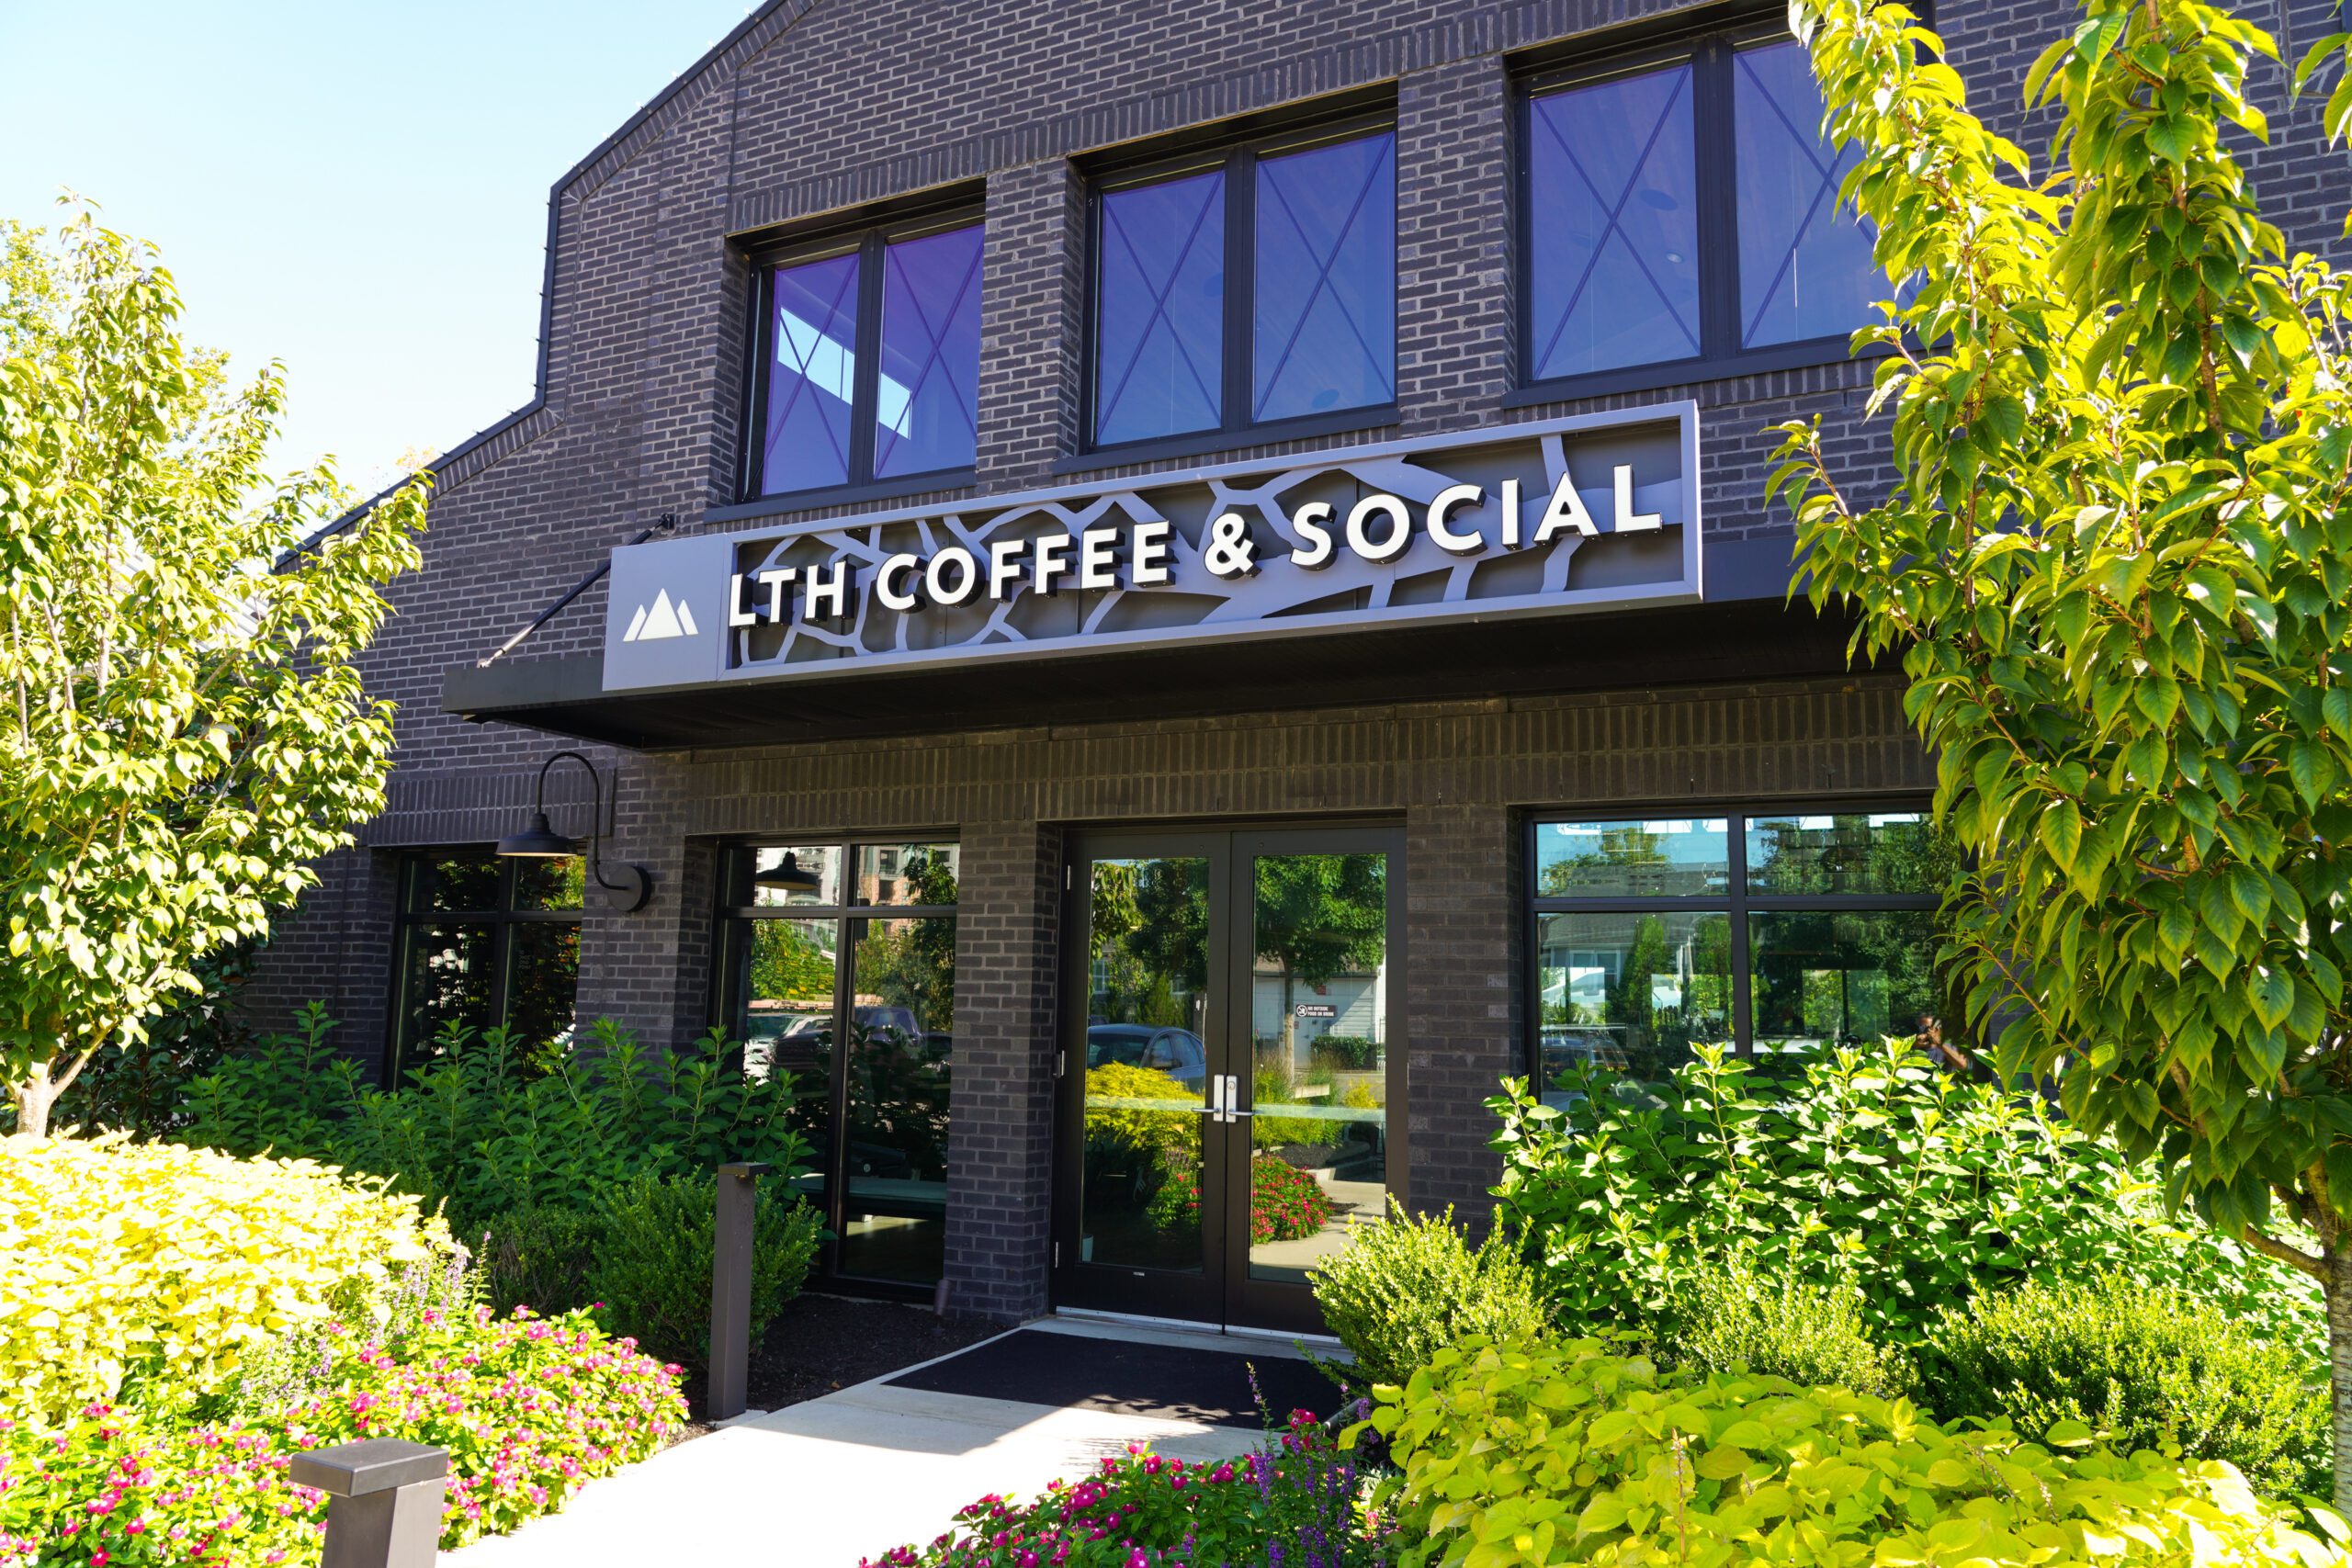 LTH Coffee & Social